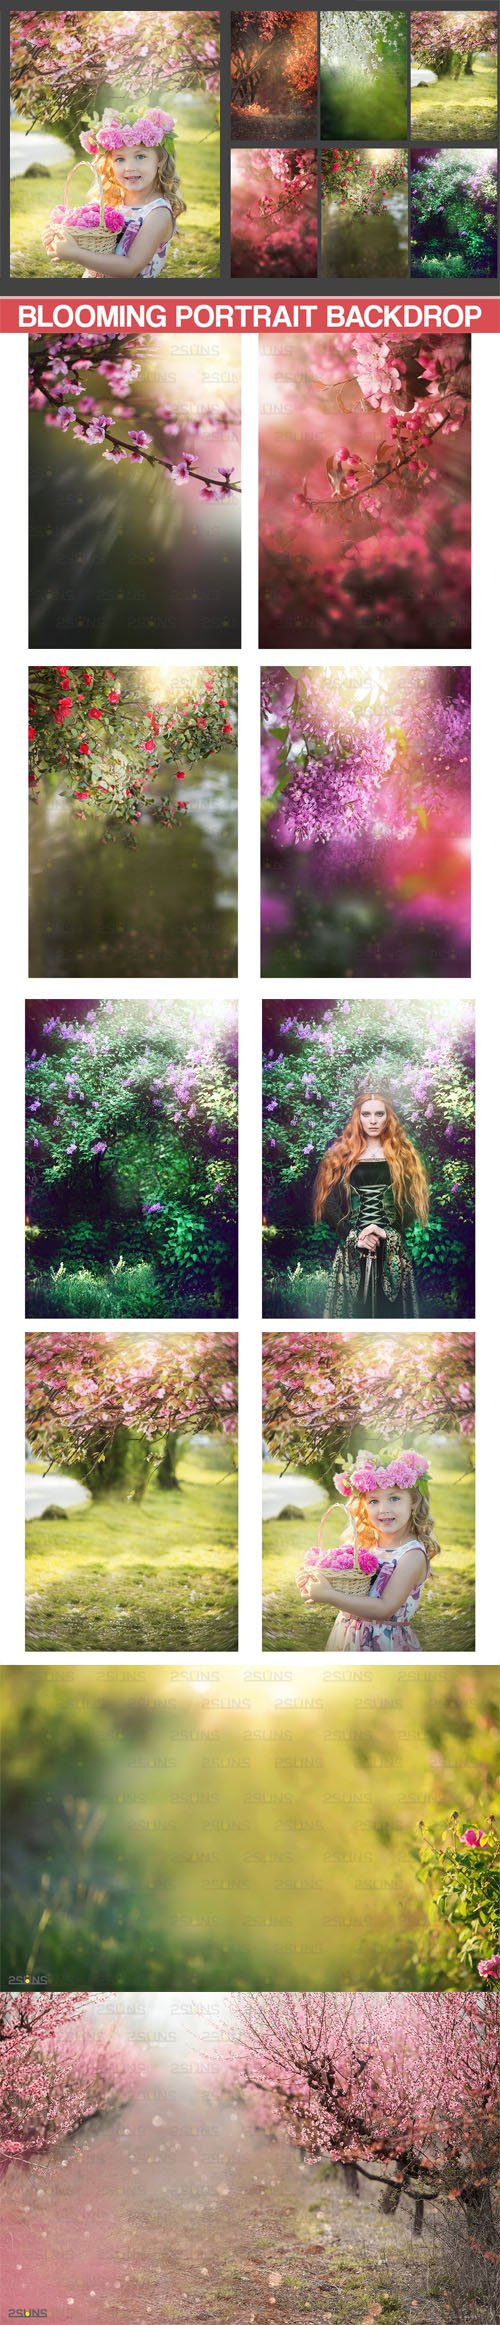 Blooming Portrait Backdrop Backgrounds Floral Art for Photoshop